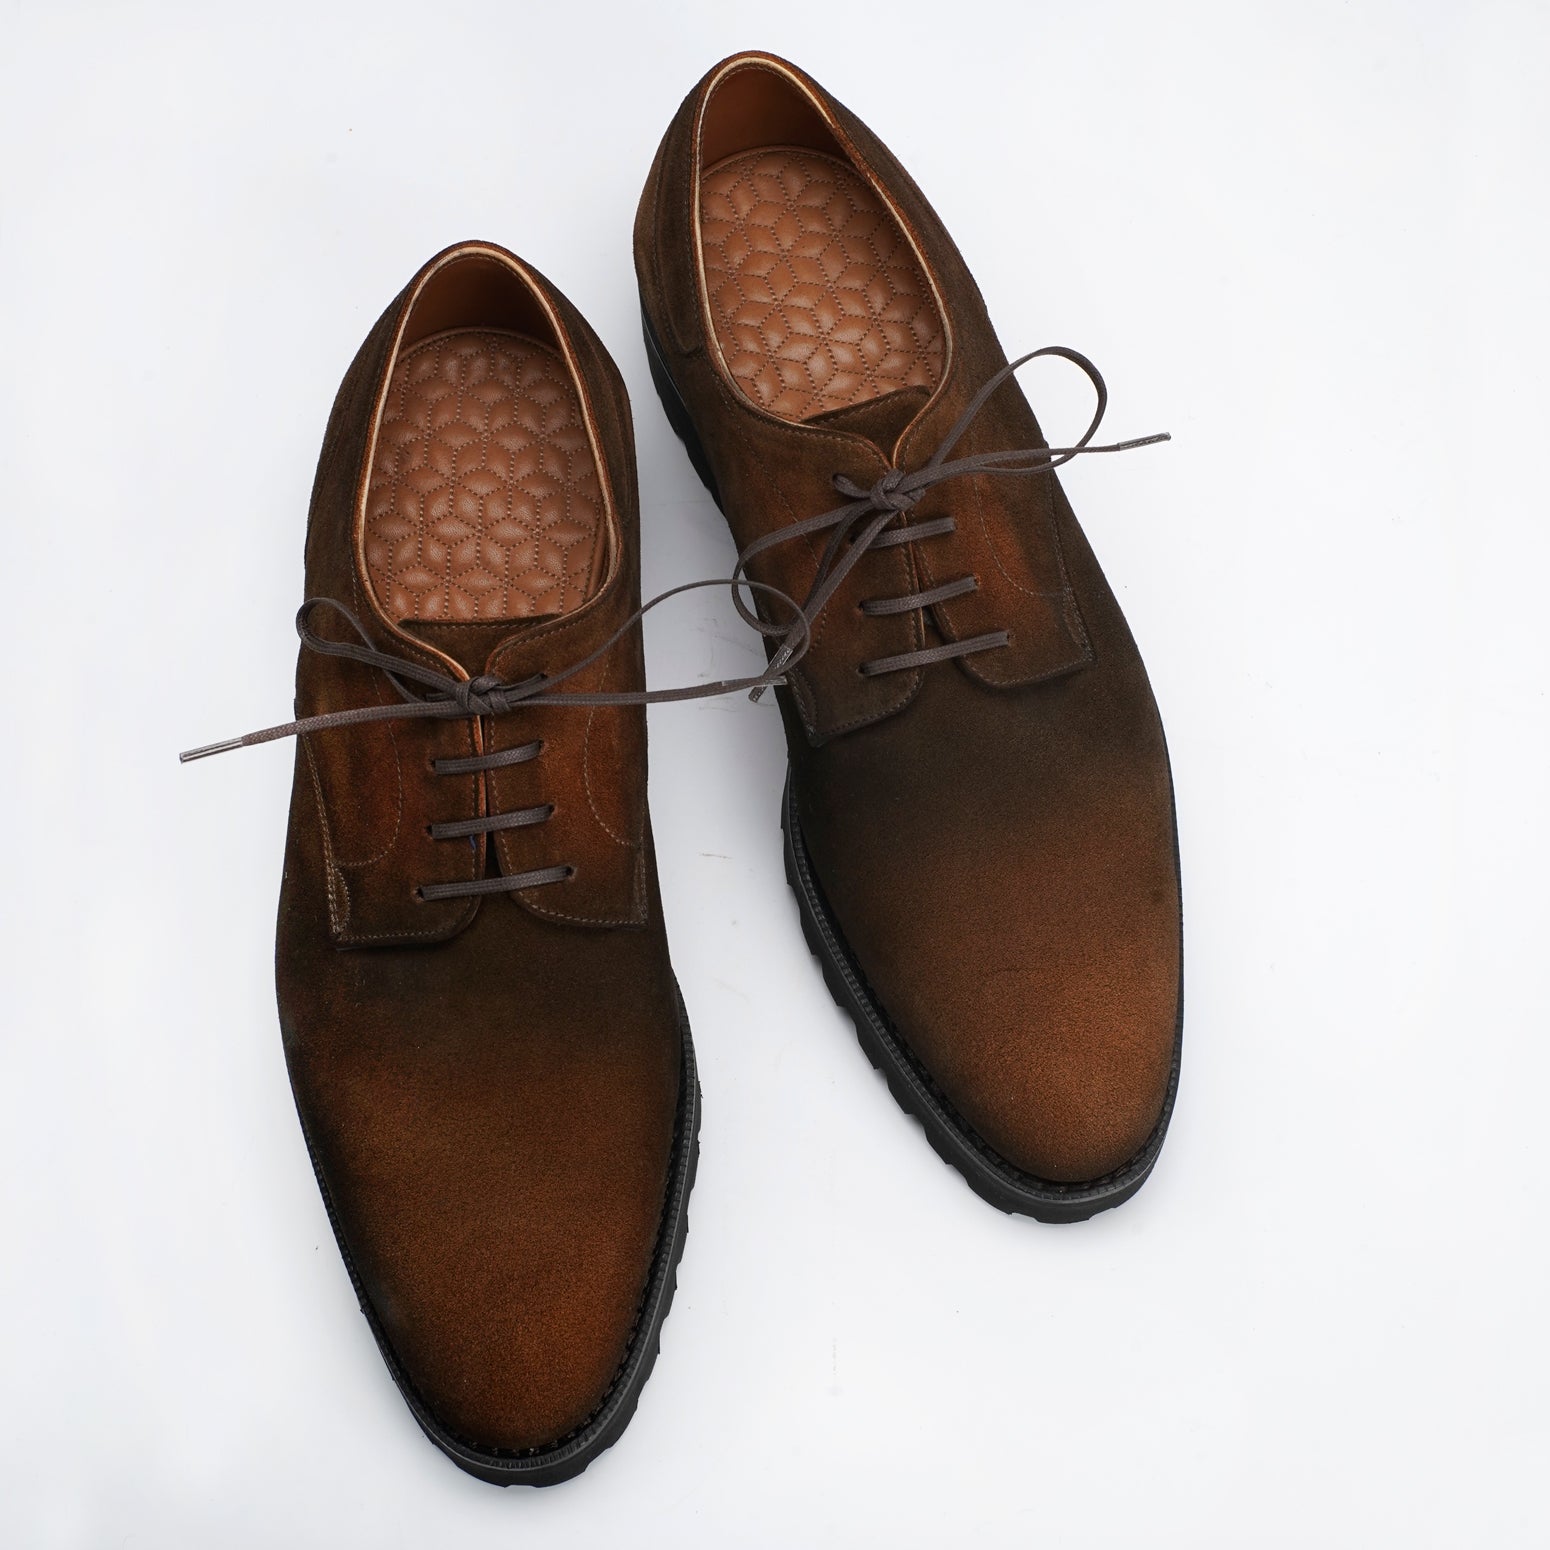 Derby Simple Shoe in brown suede by Norman Vilalta men's derby shoes in Spain